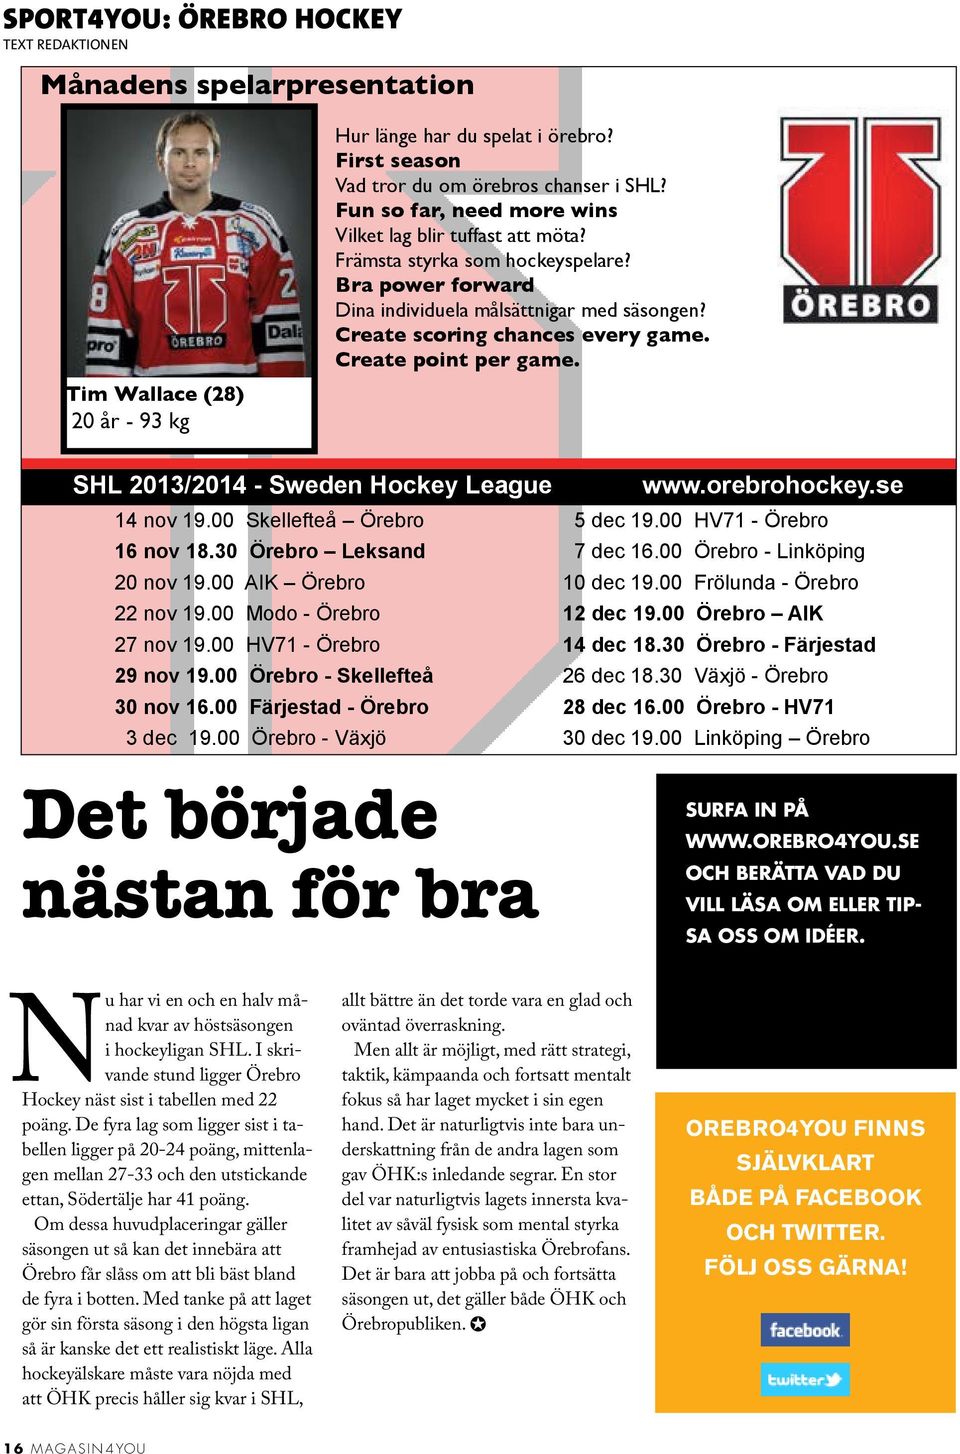 Create point per game. SHL 2013/2014 - Sweden Hockey League www.orebrohockey.se 14 nov 19.00 Skellefteå Örebro 5 dec 19.00 HV71 - Örebro 16 nov 18.30 Örebro Leksand 7 dec 16.